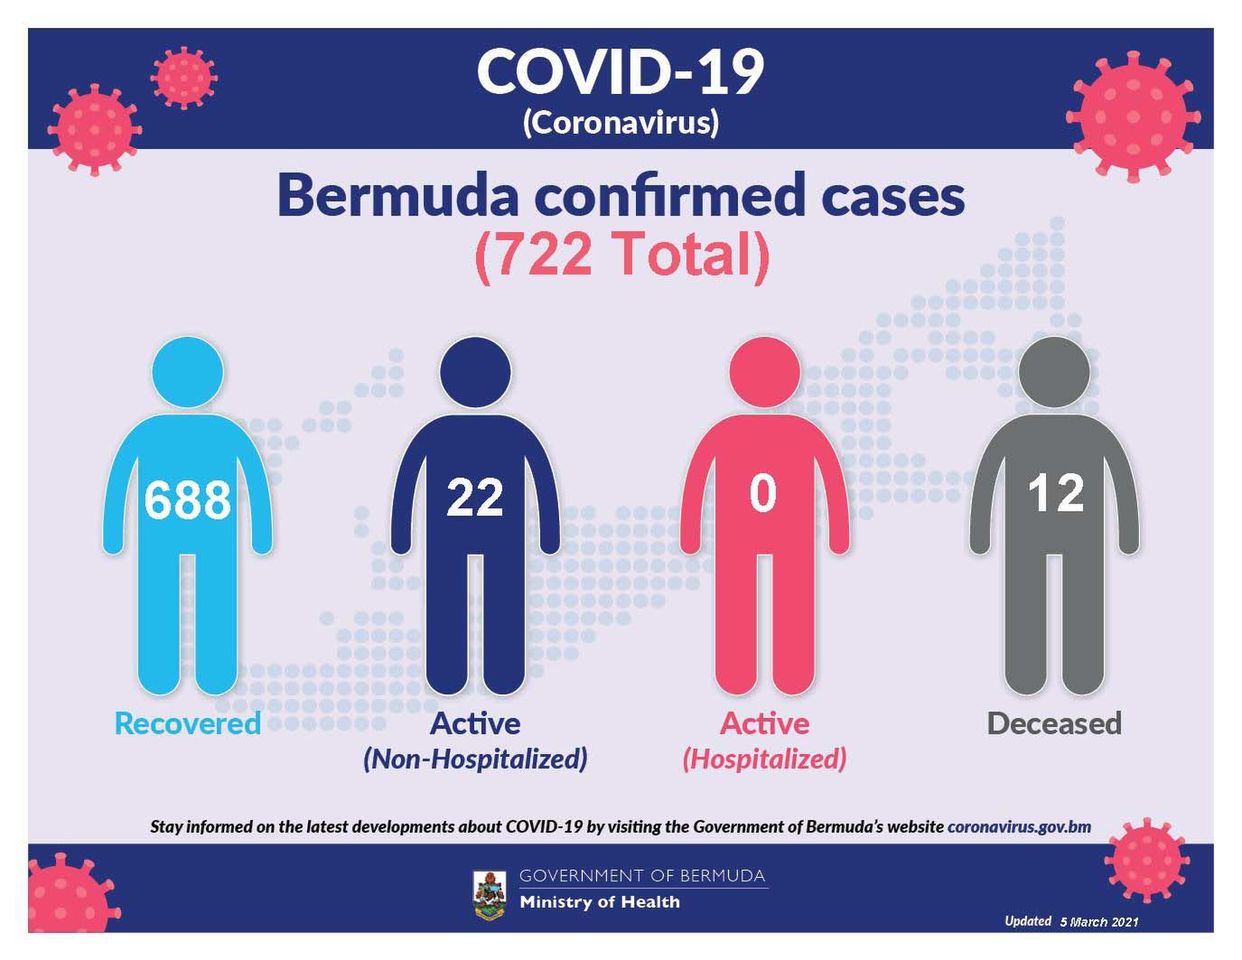 One new COVID-19 case reported in Bermuda, 5 March 2021